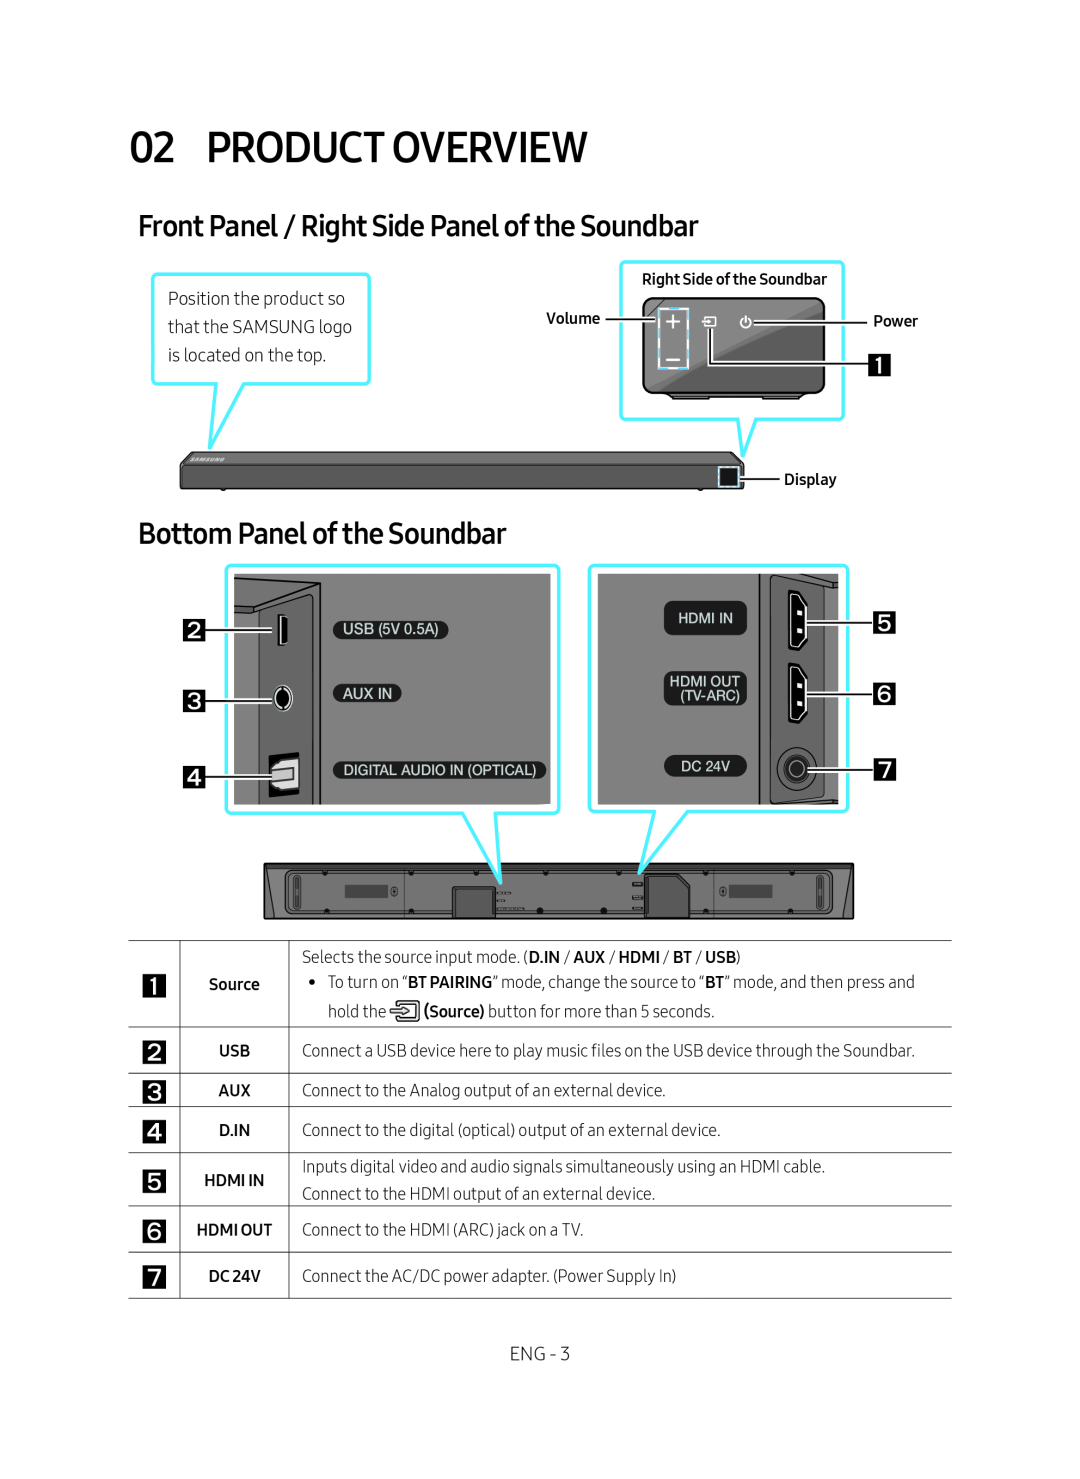 Front Panel / Right Side Panel of the Soundbar Standard HW-NM65C